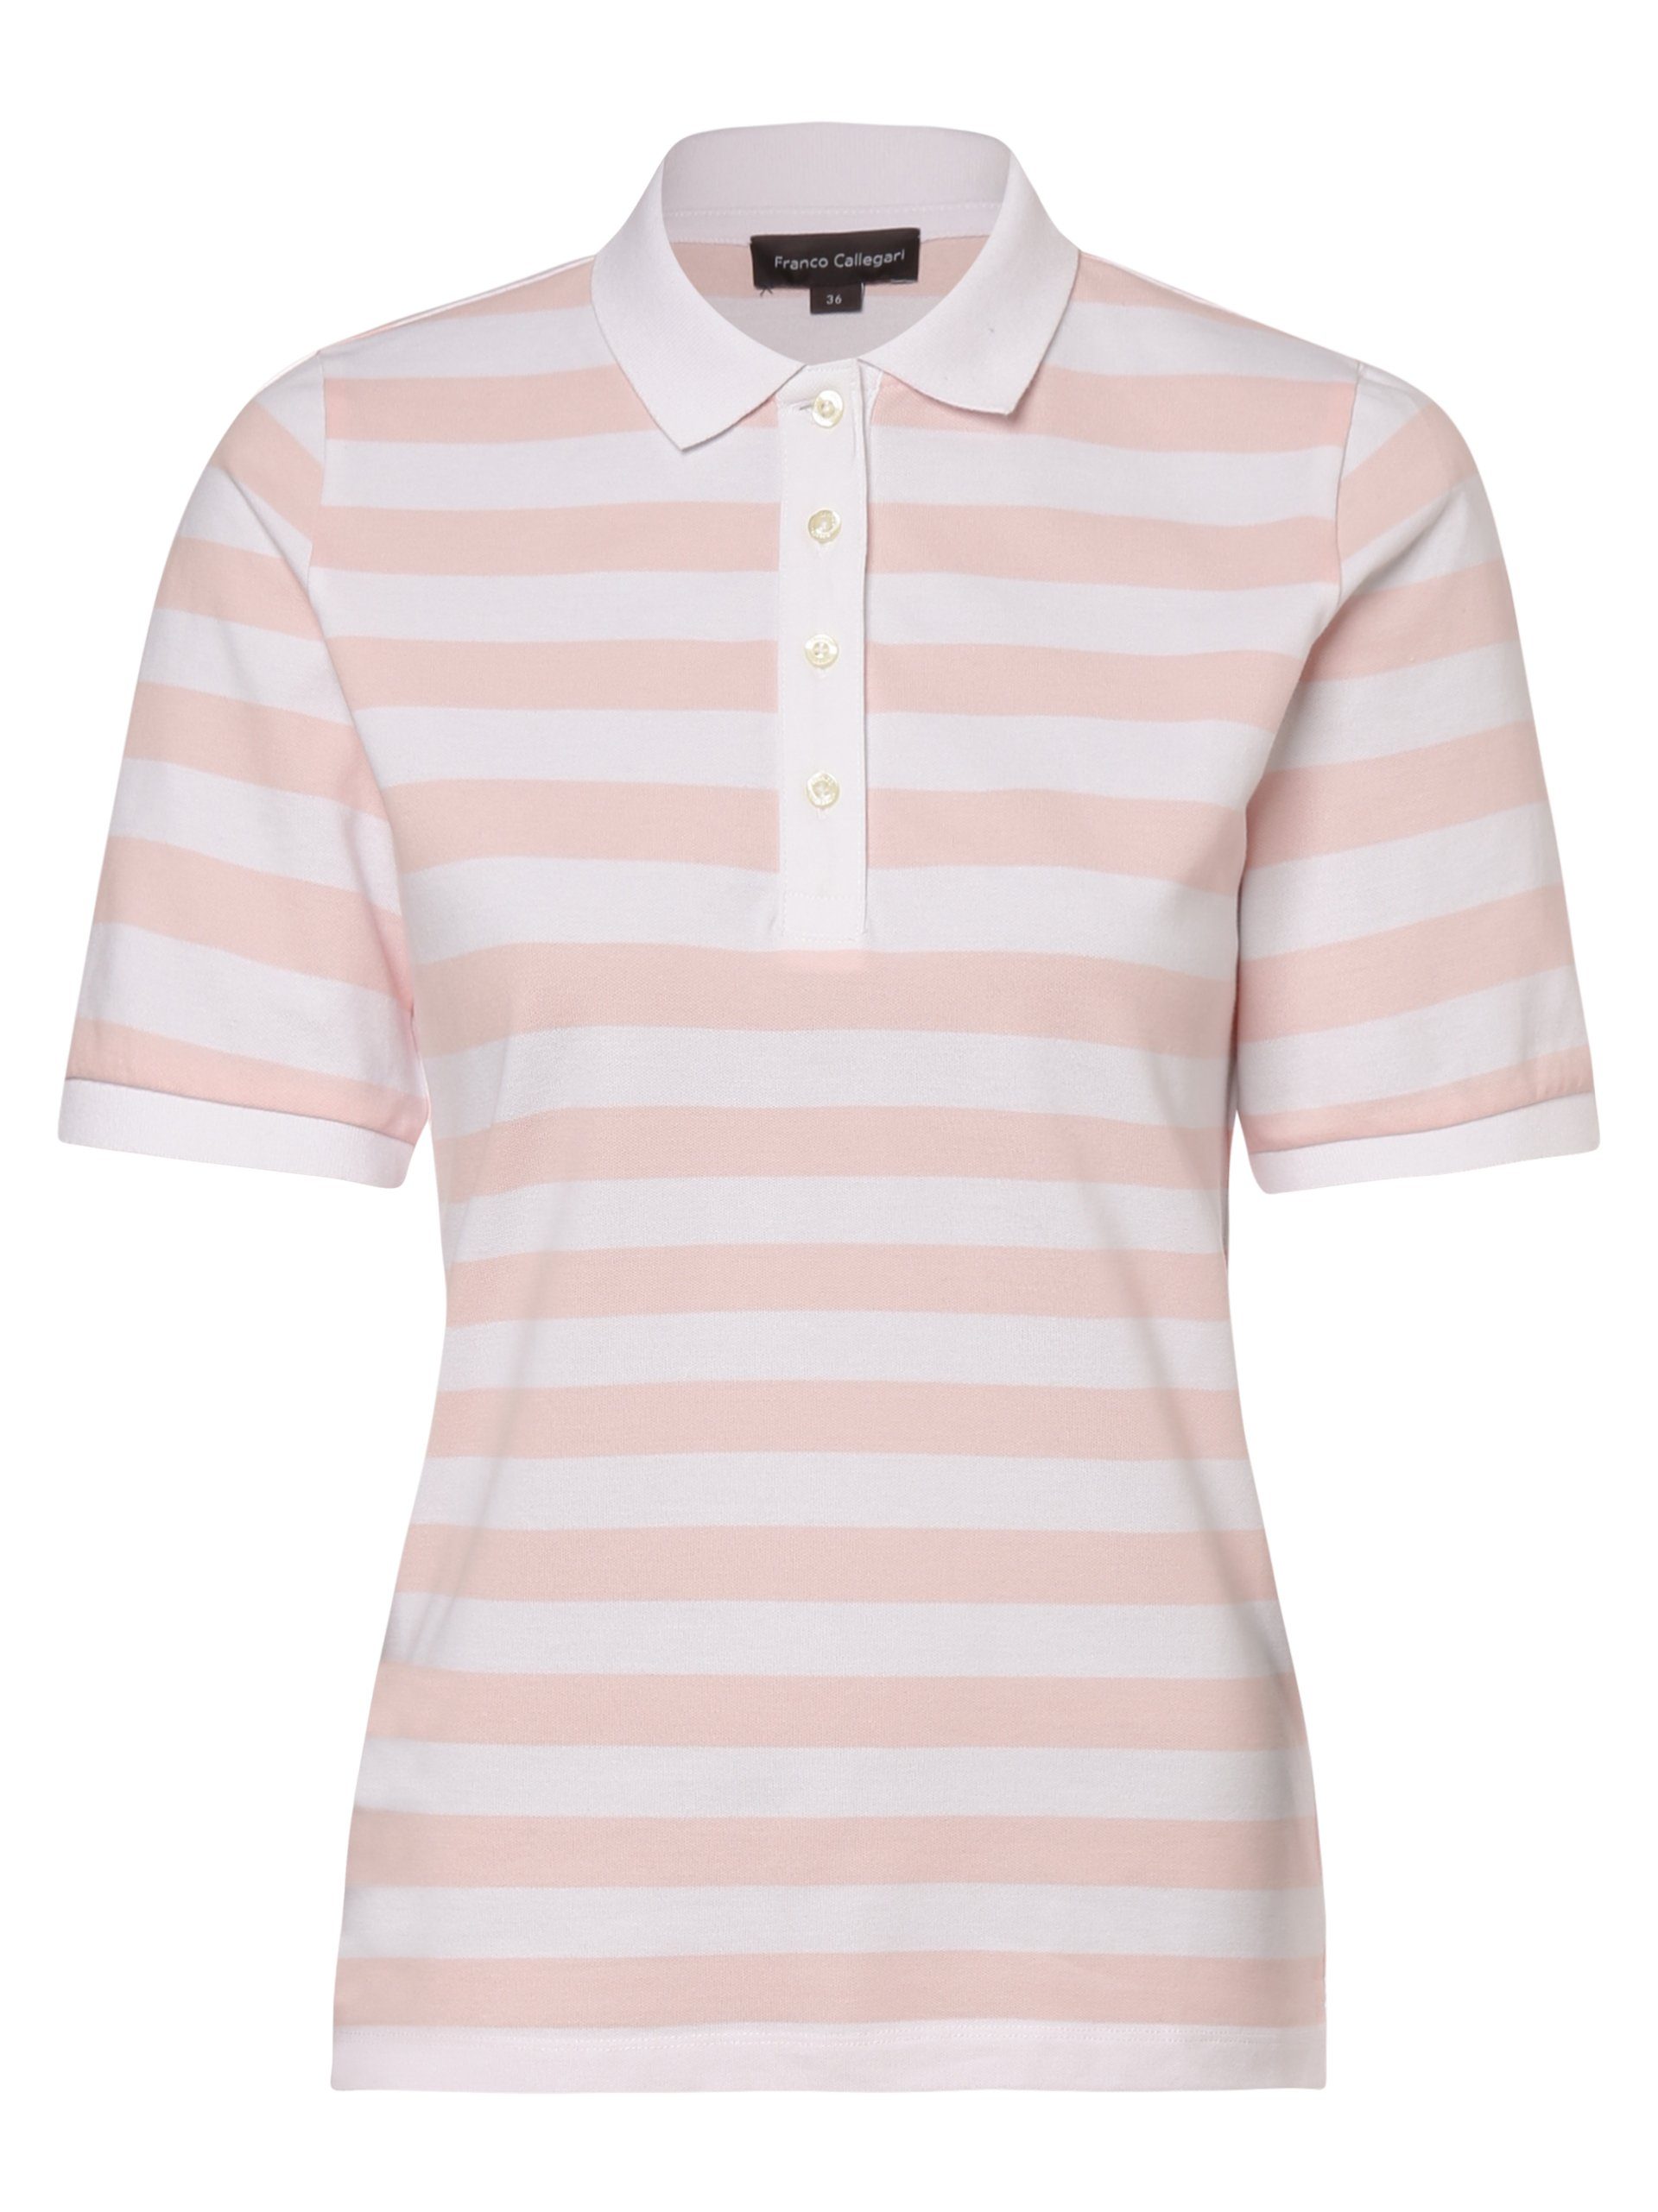 Franco Callegari Poloshirt weiß rosa | Poloshirts